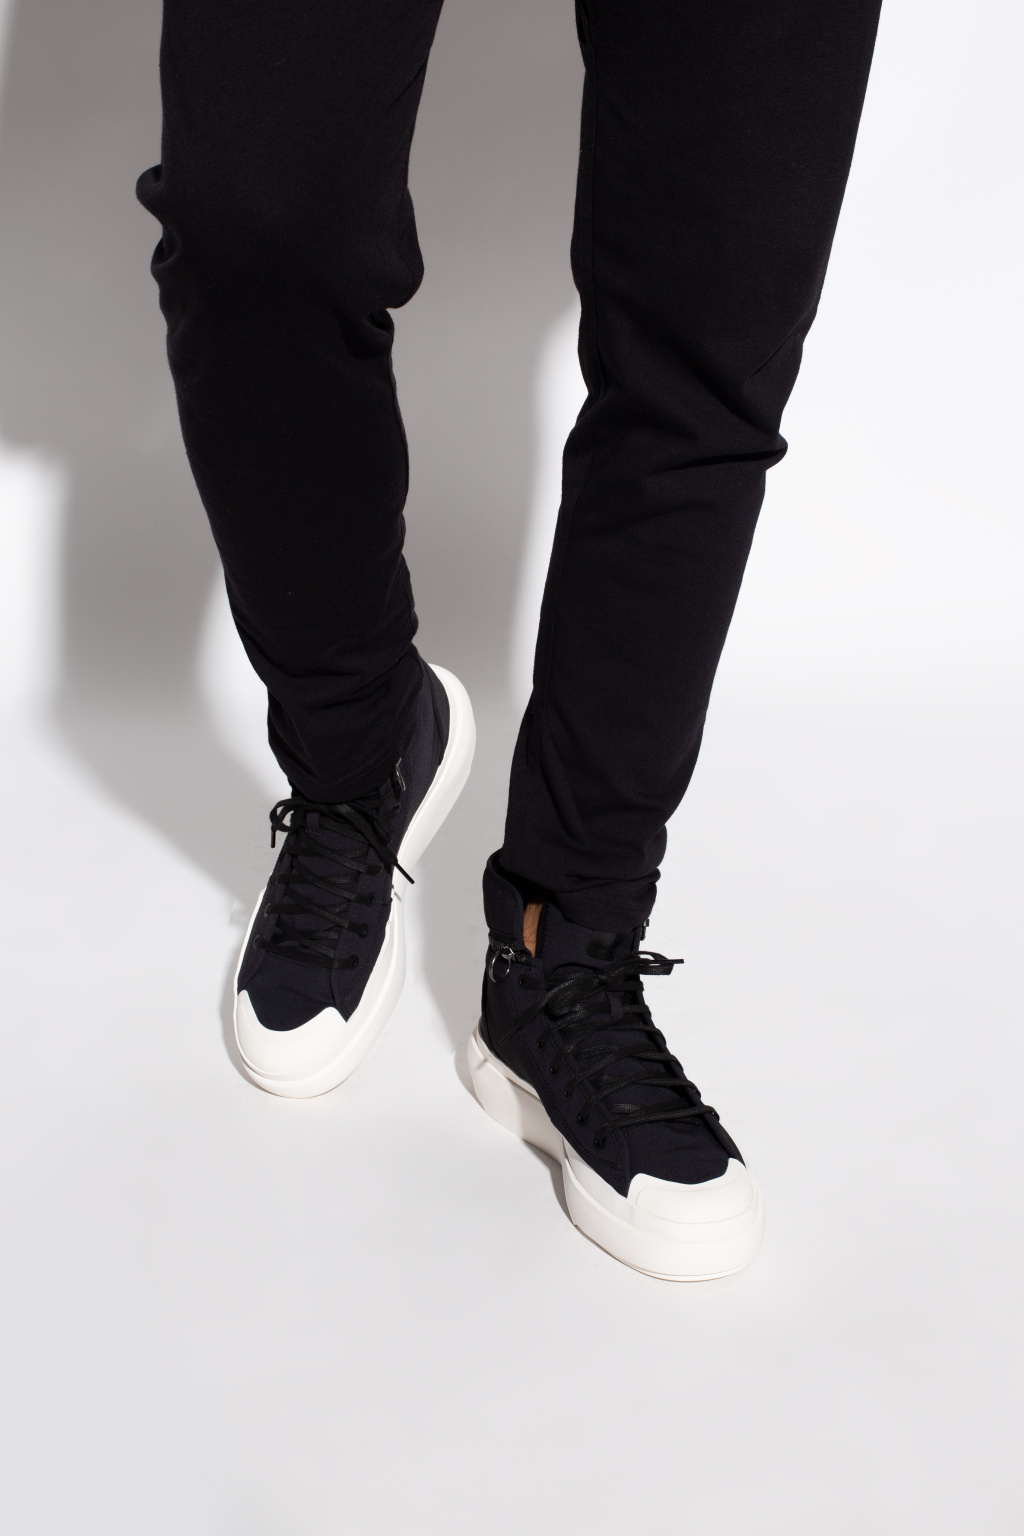 Supra vaider black white mens skateboard sneakers s28293 ‘Ajatu Court High’ sneakers